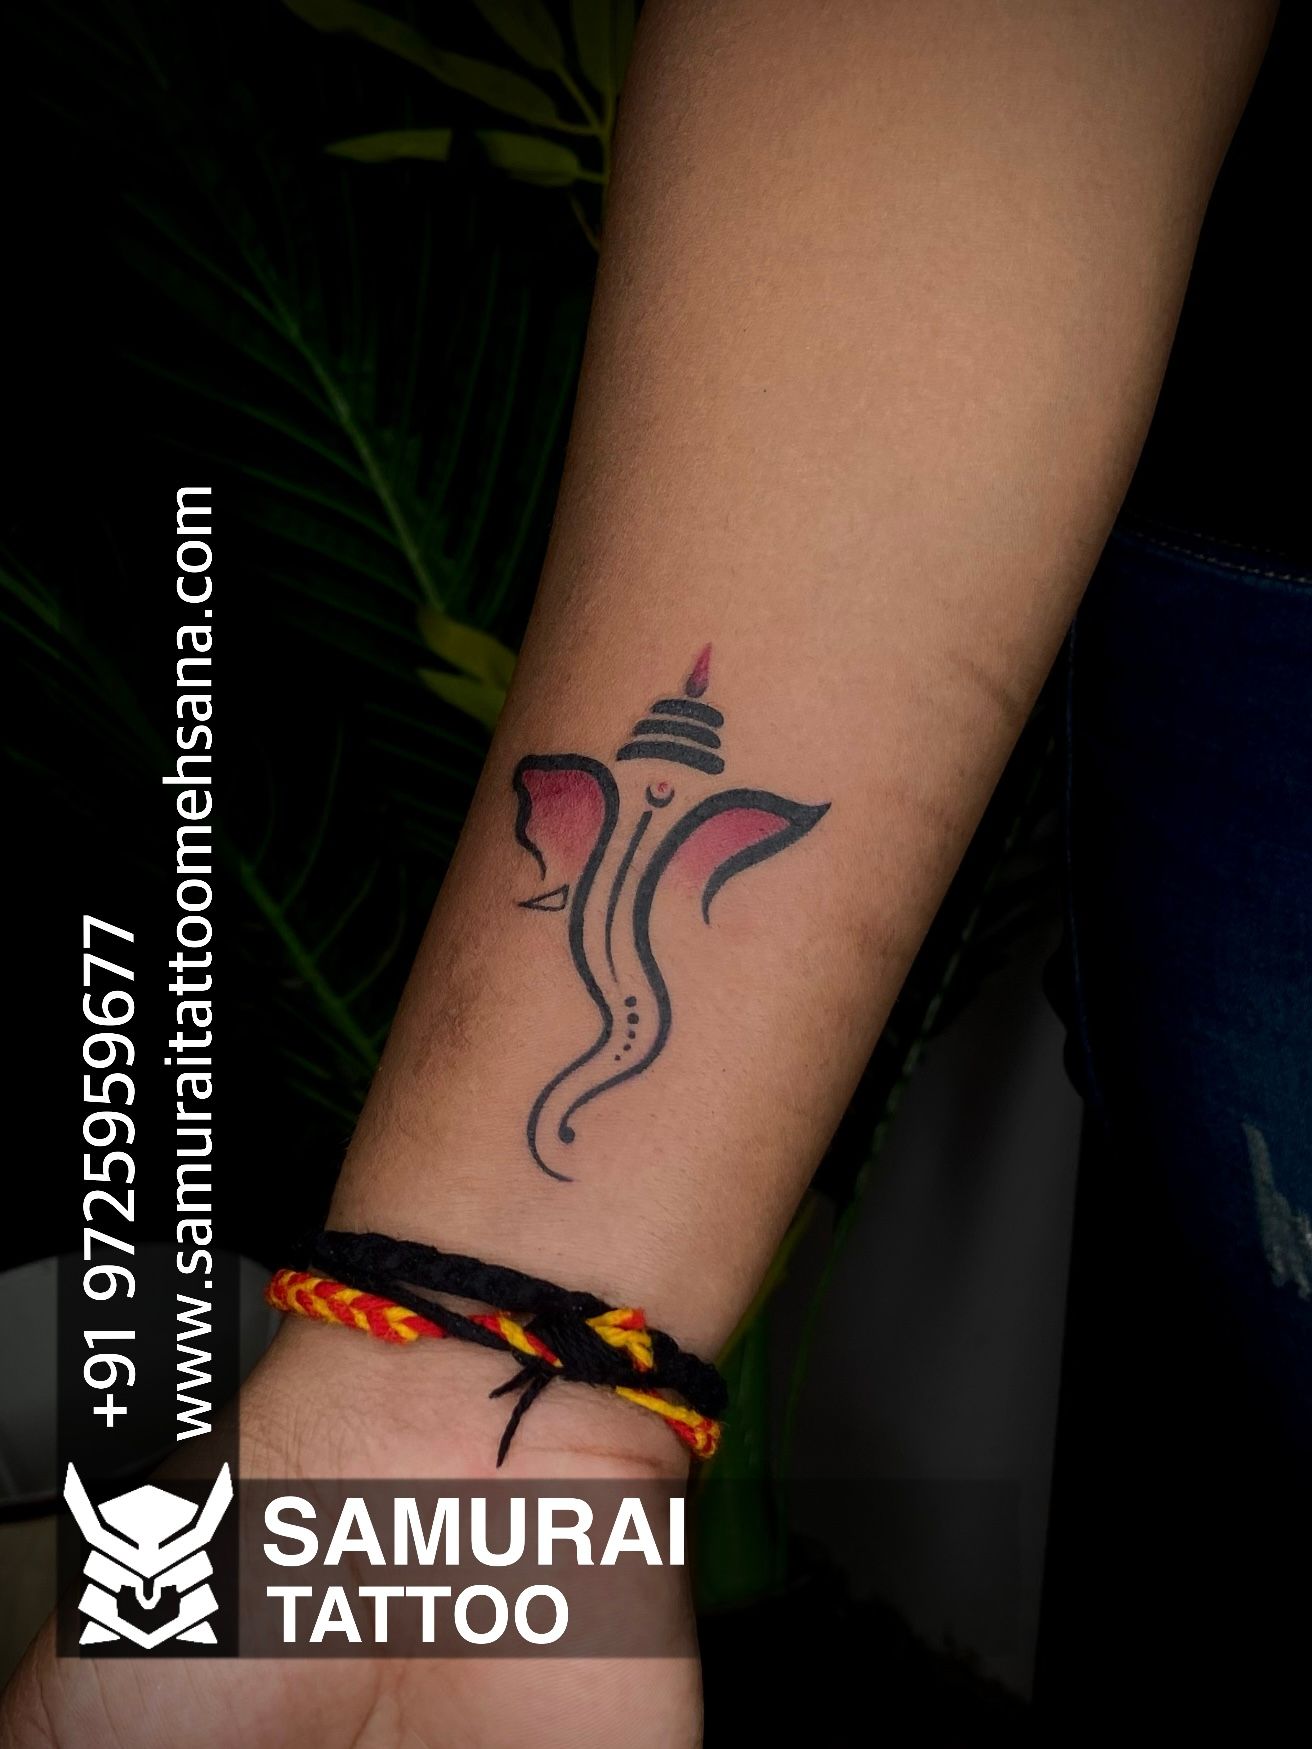 Tattoo uploaded by Vipul Chaudhary  Ganeshji tattoo  Ganesha tattoo   Ganpati dada tattoo  Tattoodo